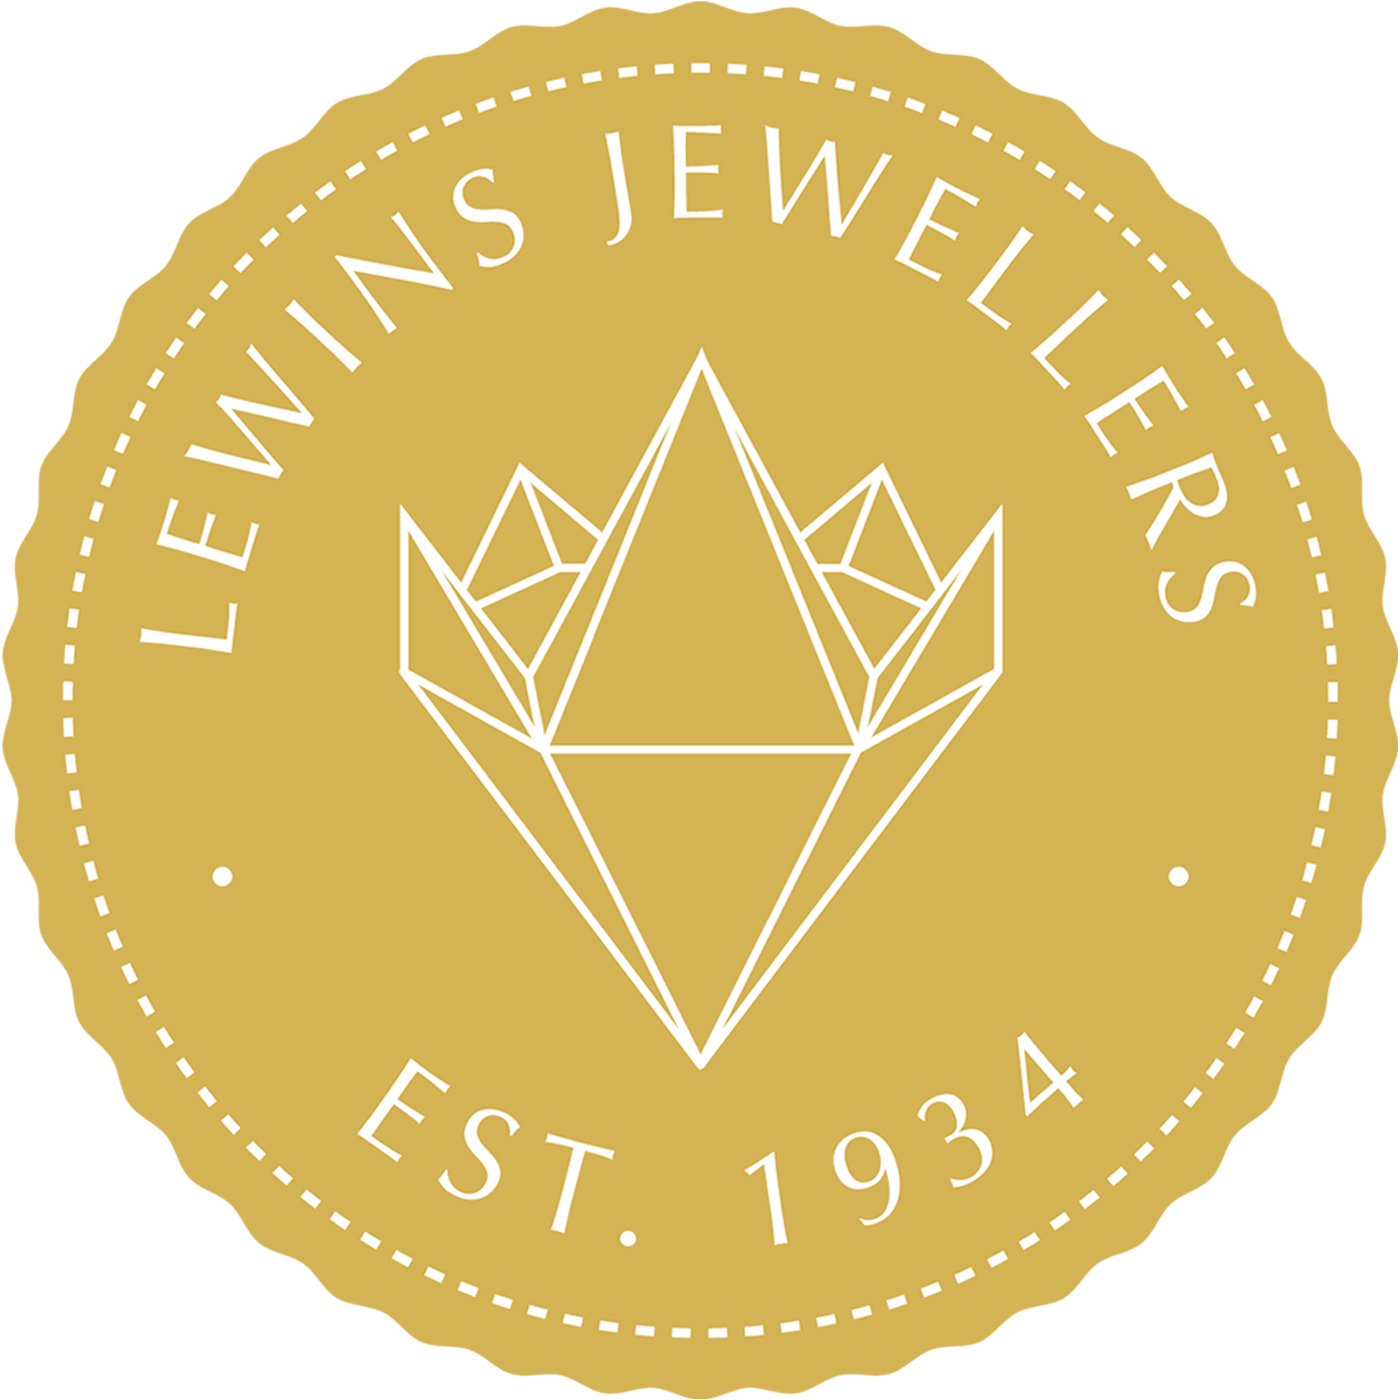 Lewins Jewellers EST 1934 Gold Seal